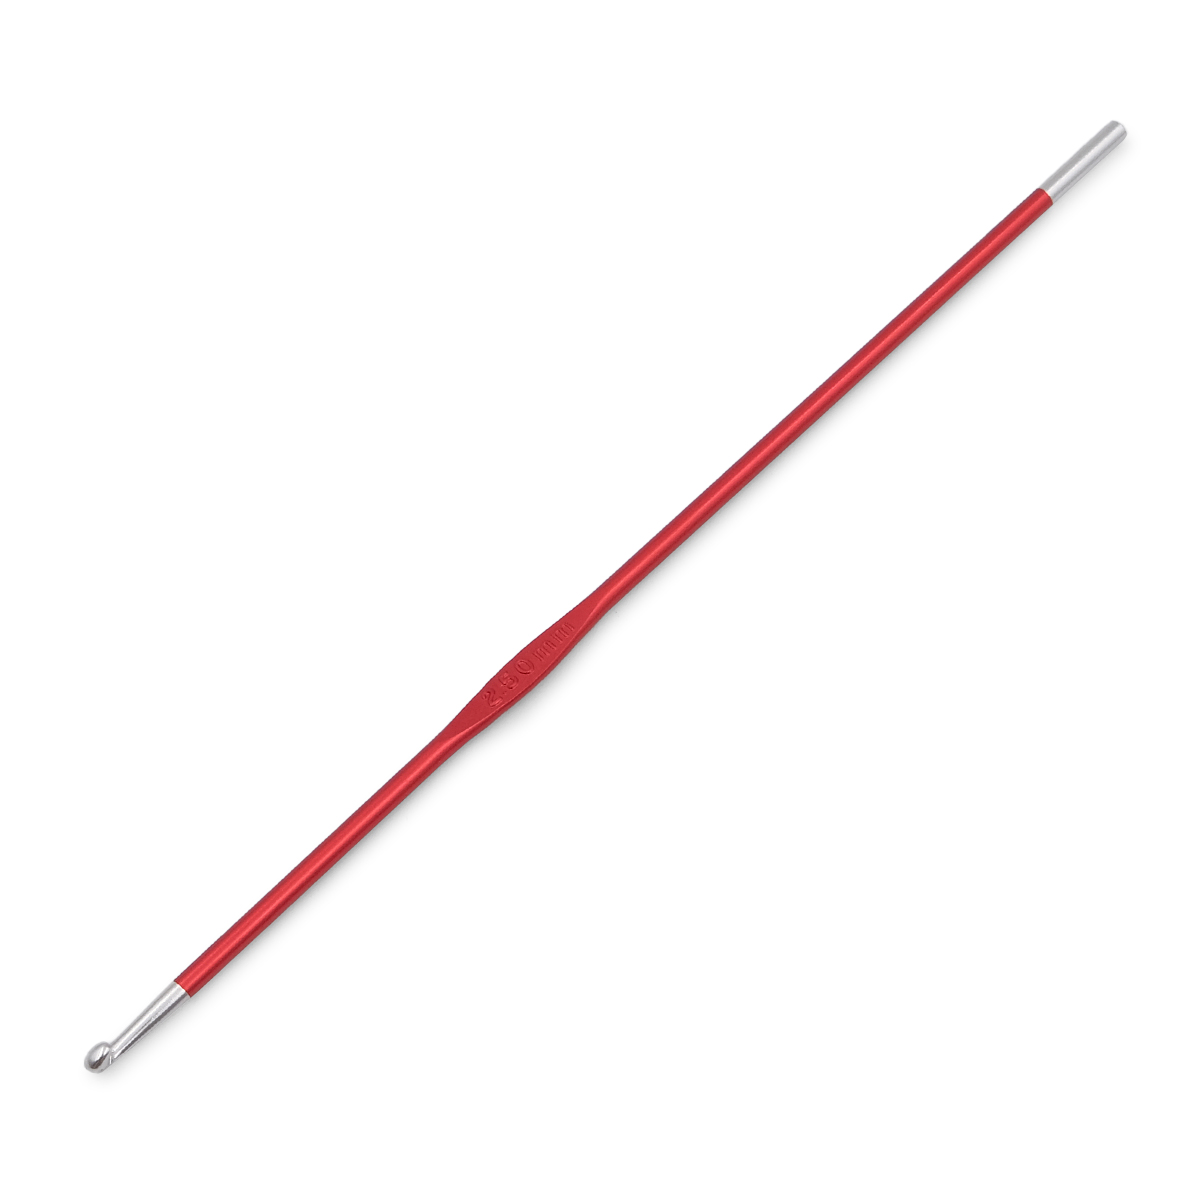 Крючок для вязания Zing 2,5мм, алюминий, гранатовый, KnitPro